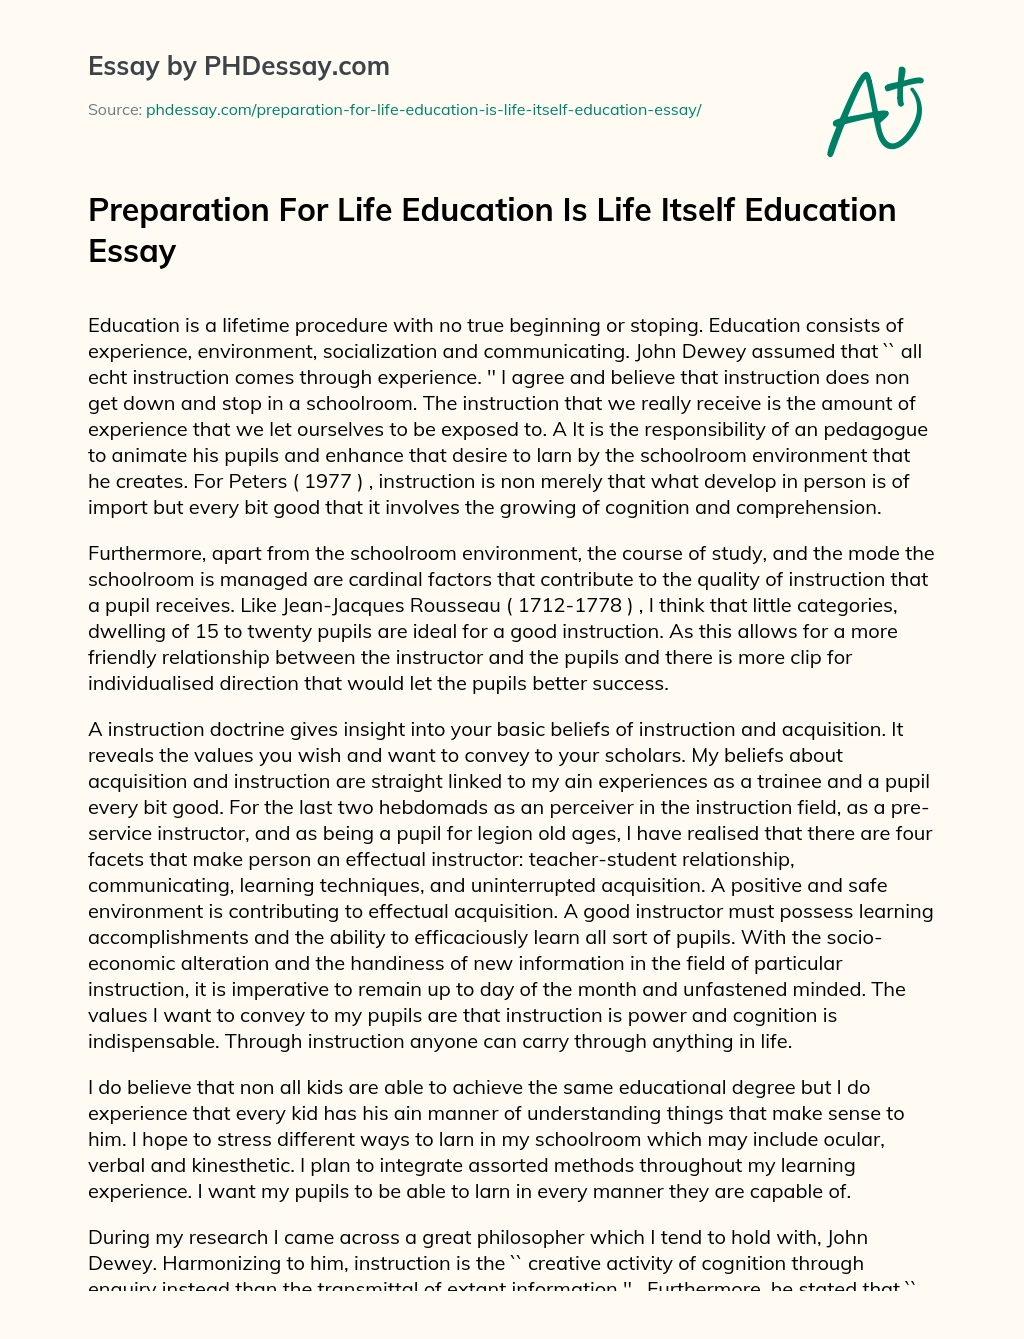 Preparation For Life Education Is Life Itself Education Essay essay